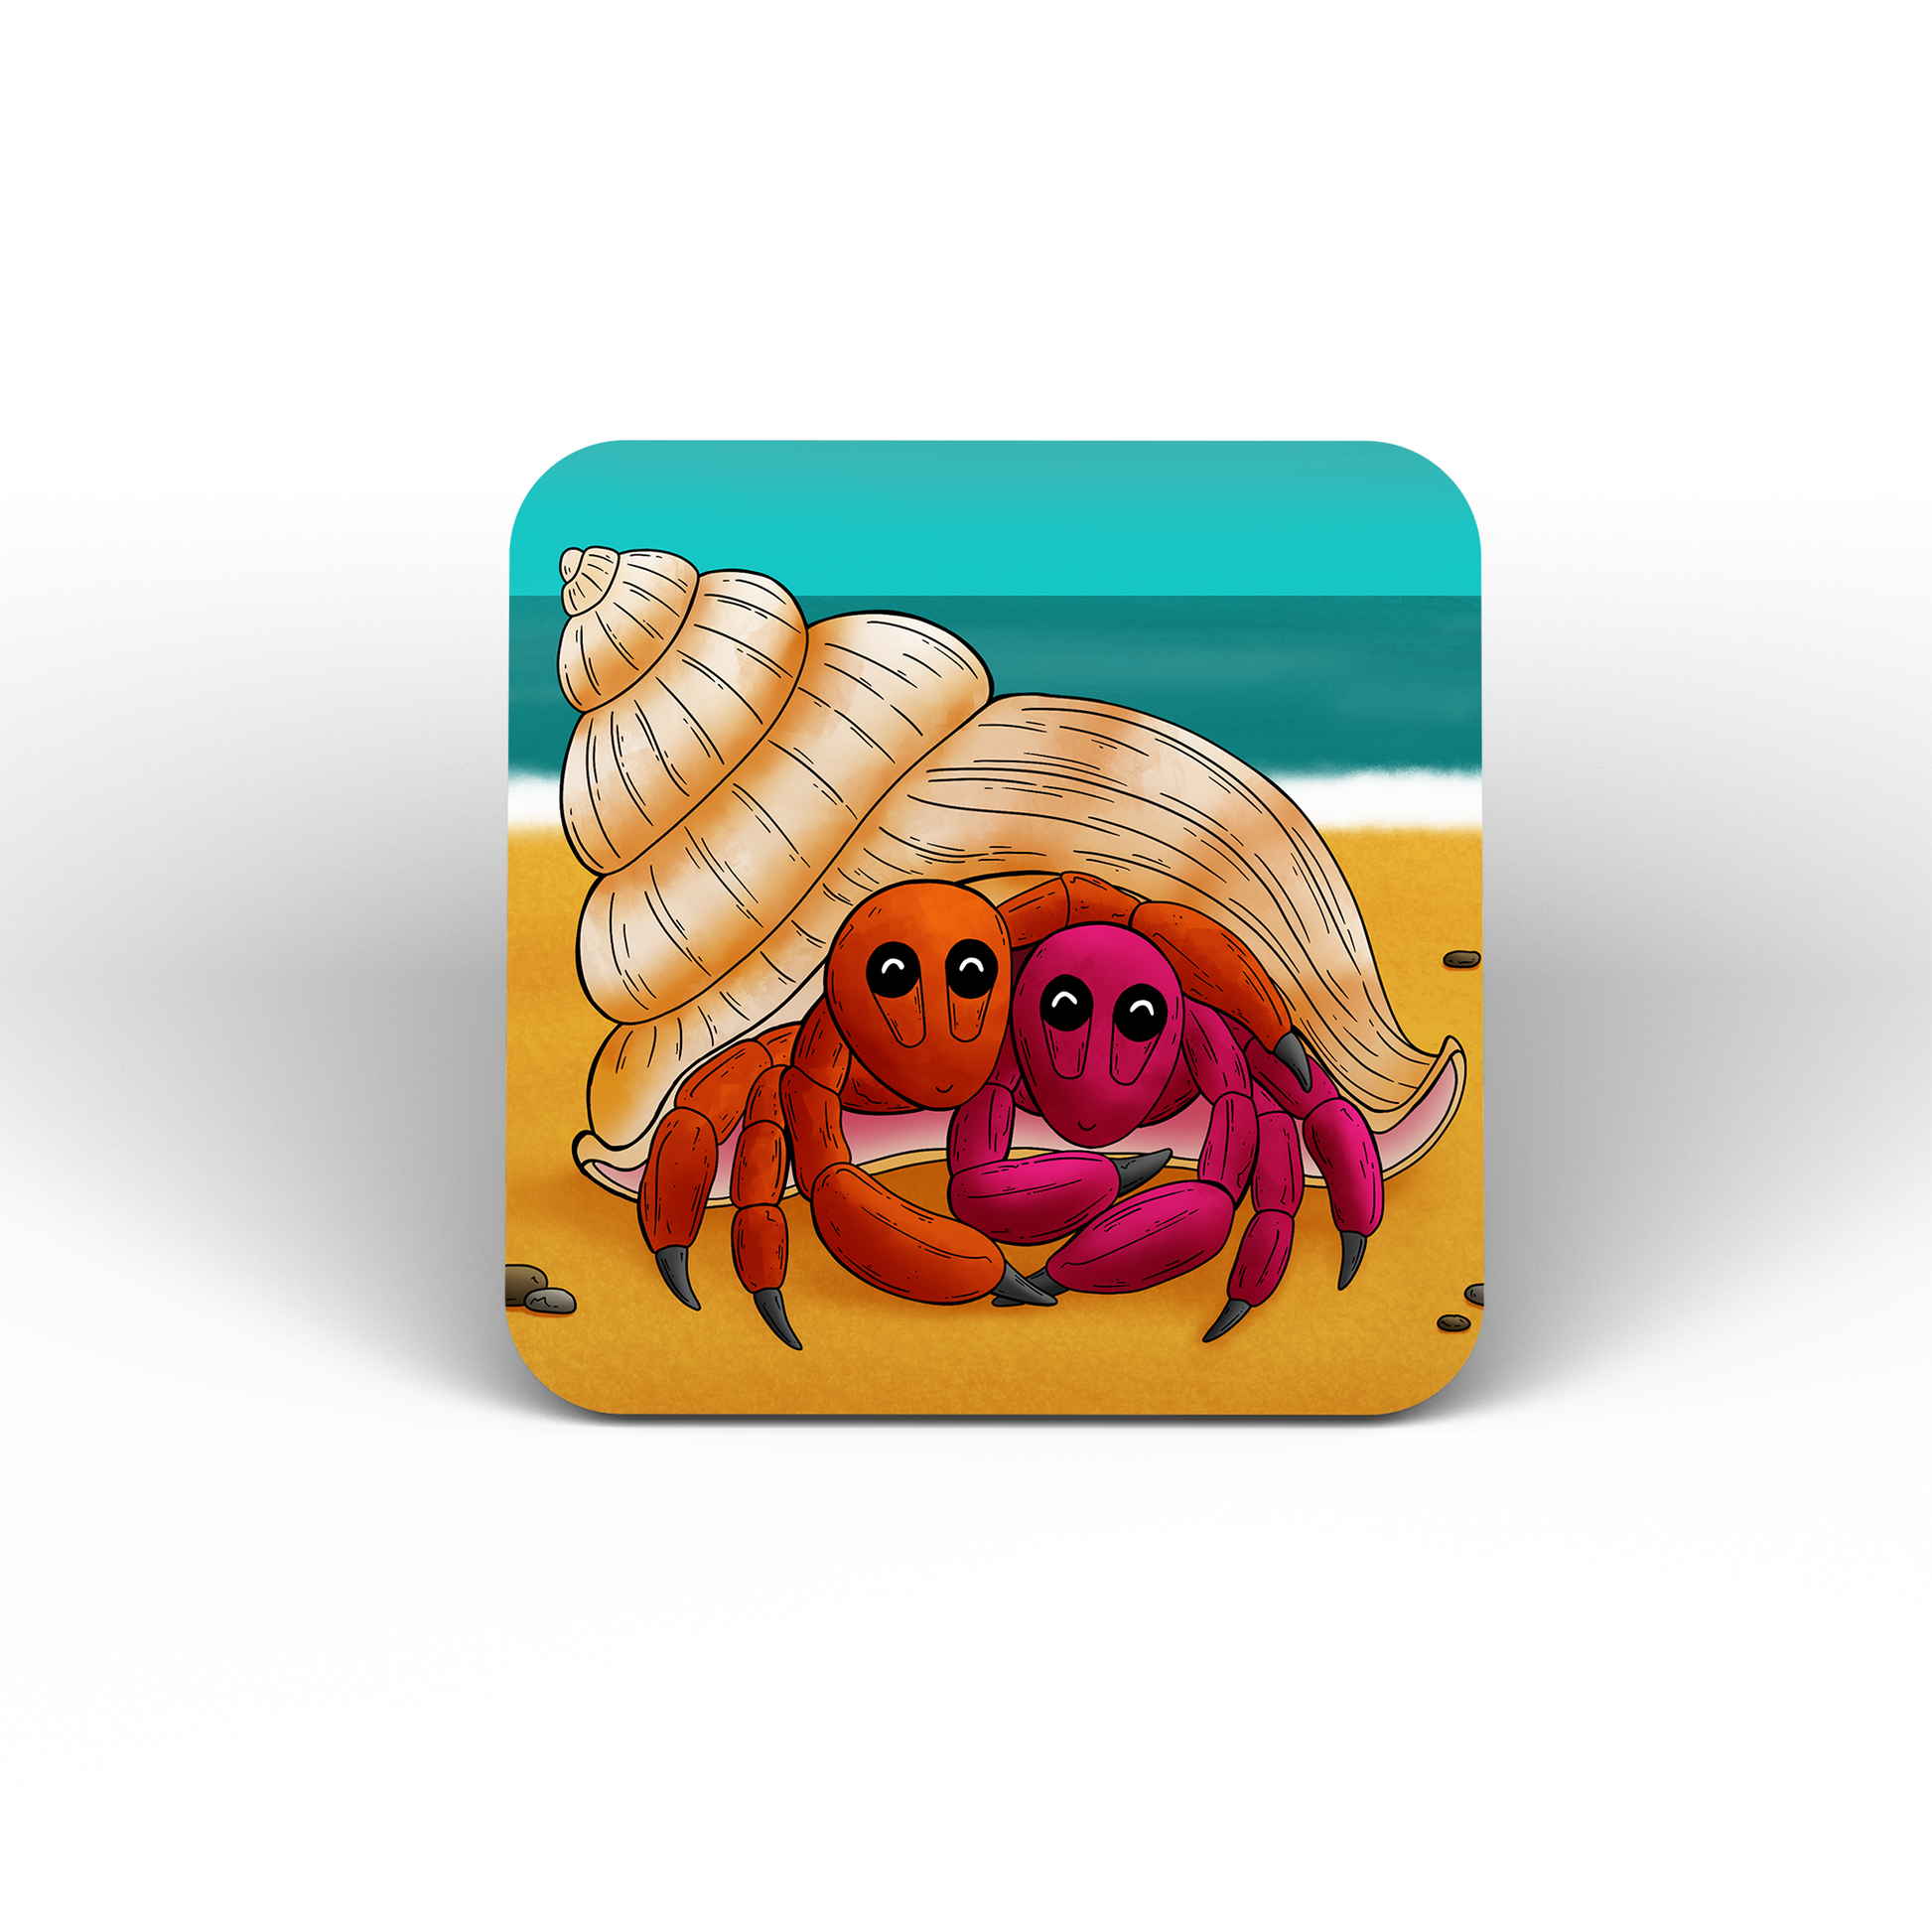 hermit crab no shell